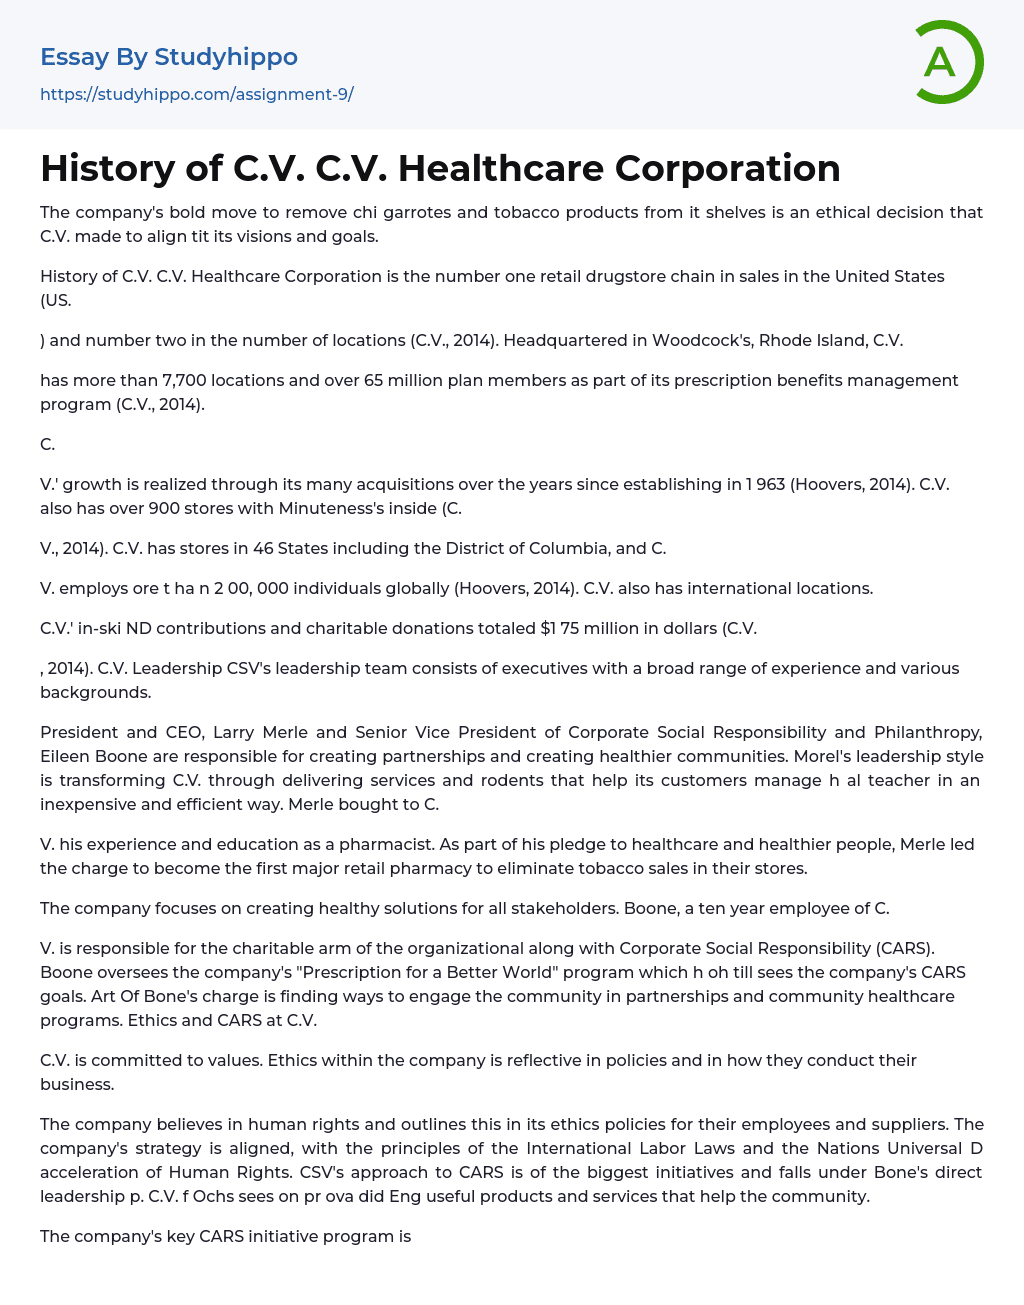 History of C.V. C.V. Healthcare Corporation Essay Example